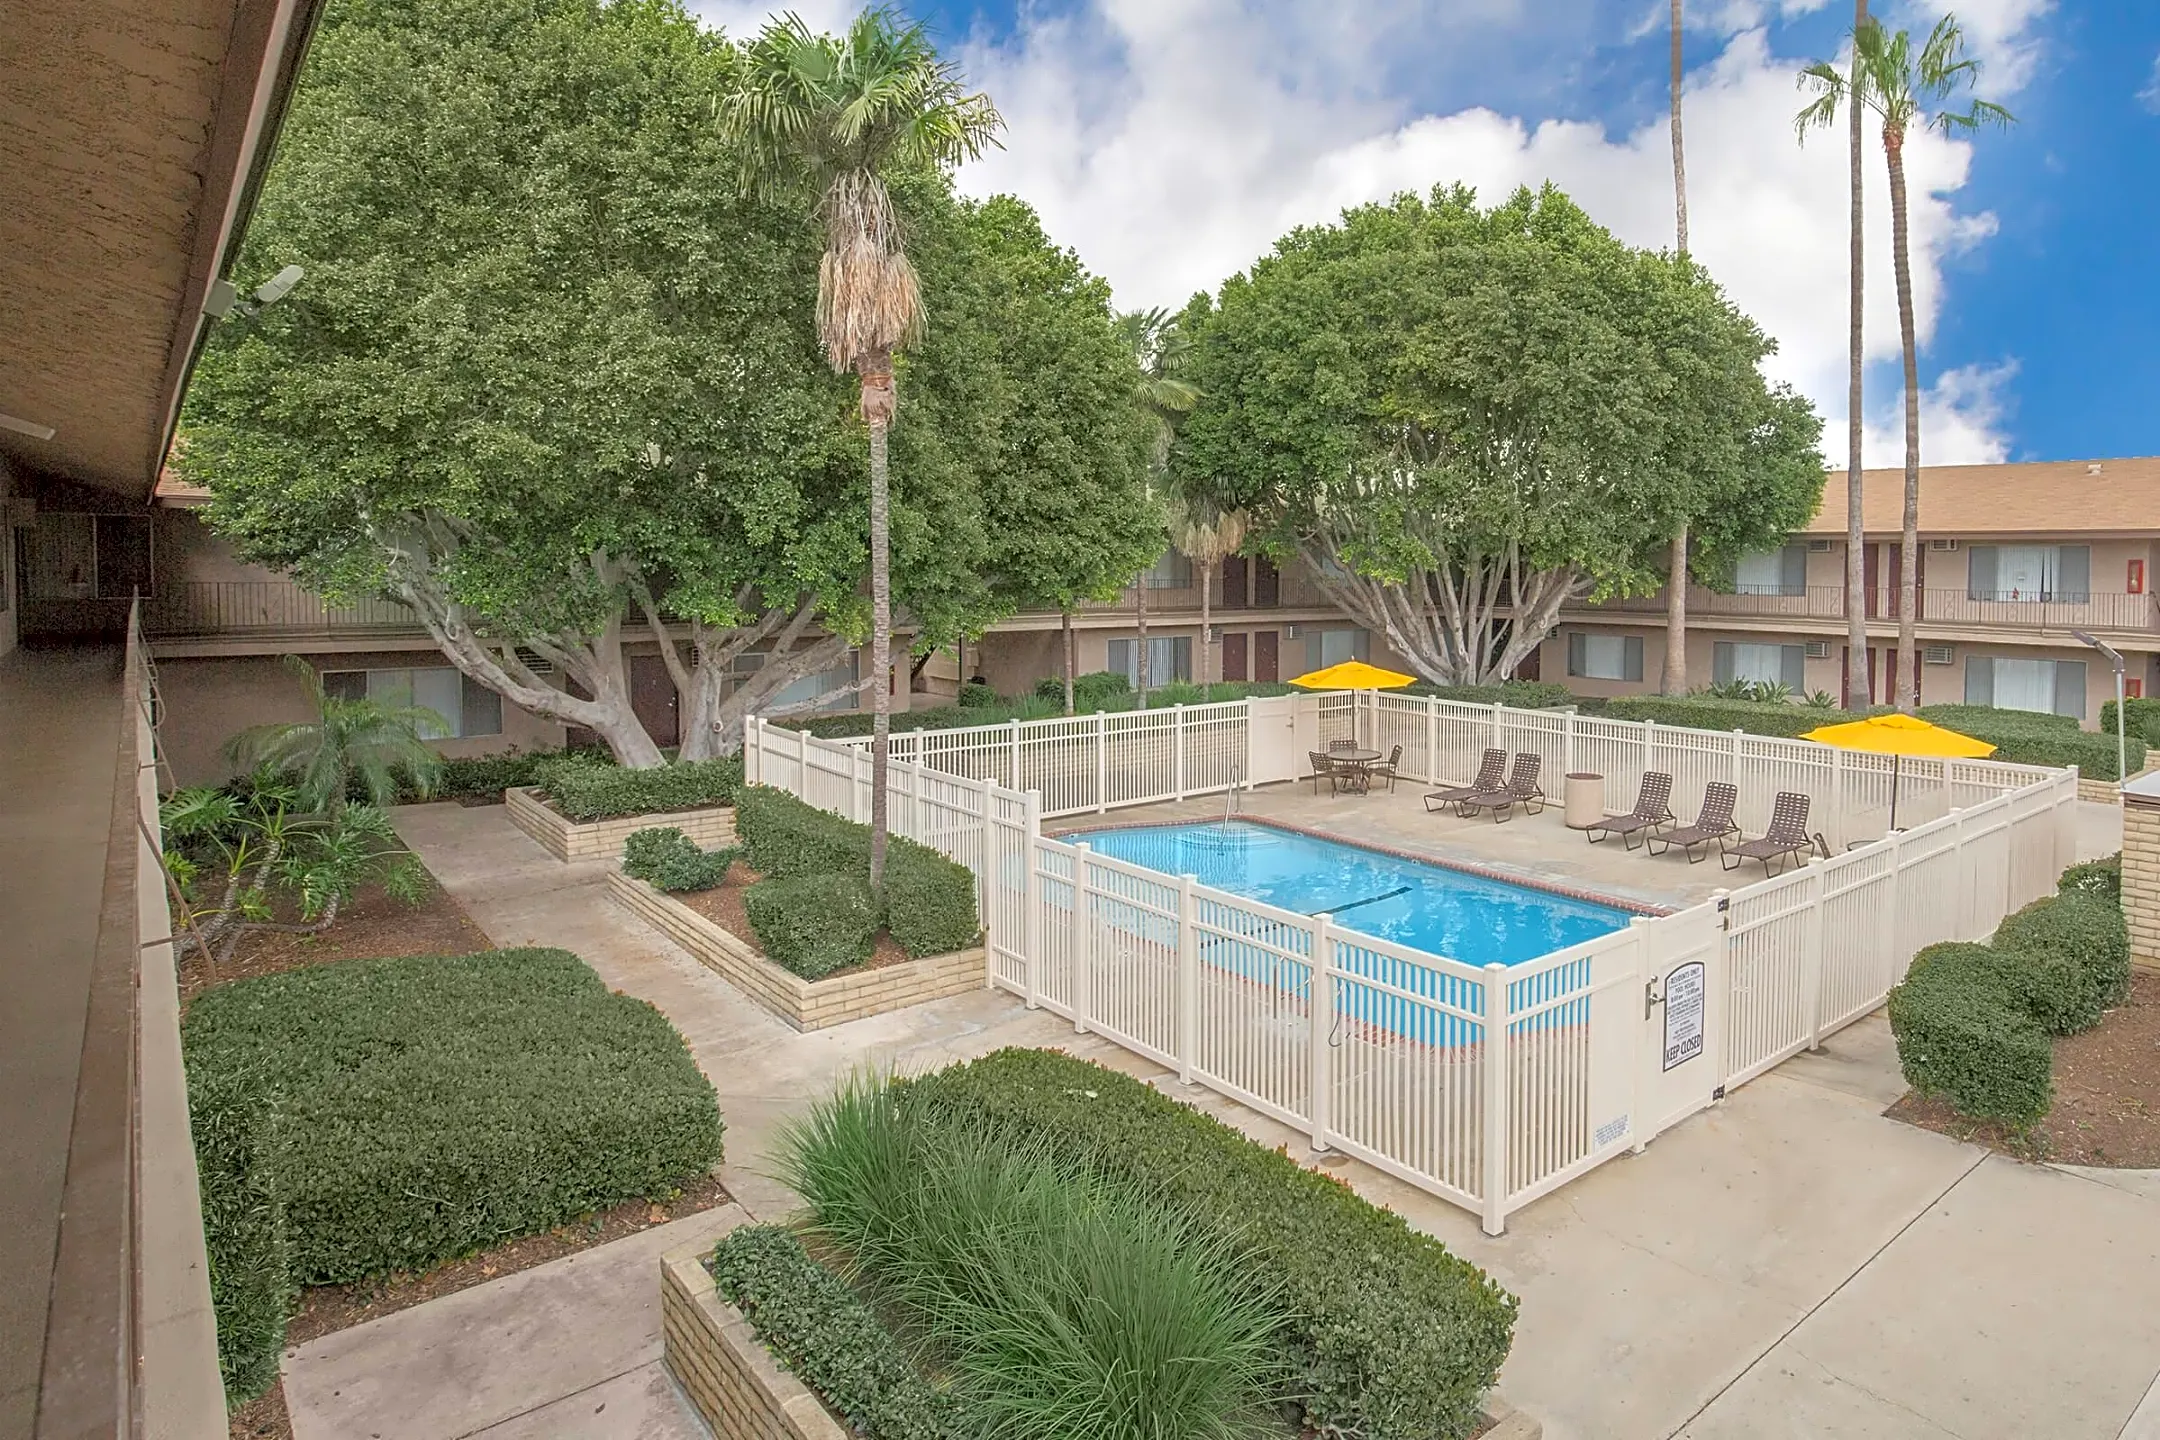 Pool - Castilian & Cordova Apartment Homes - Tustin, CA